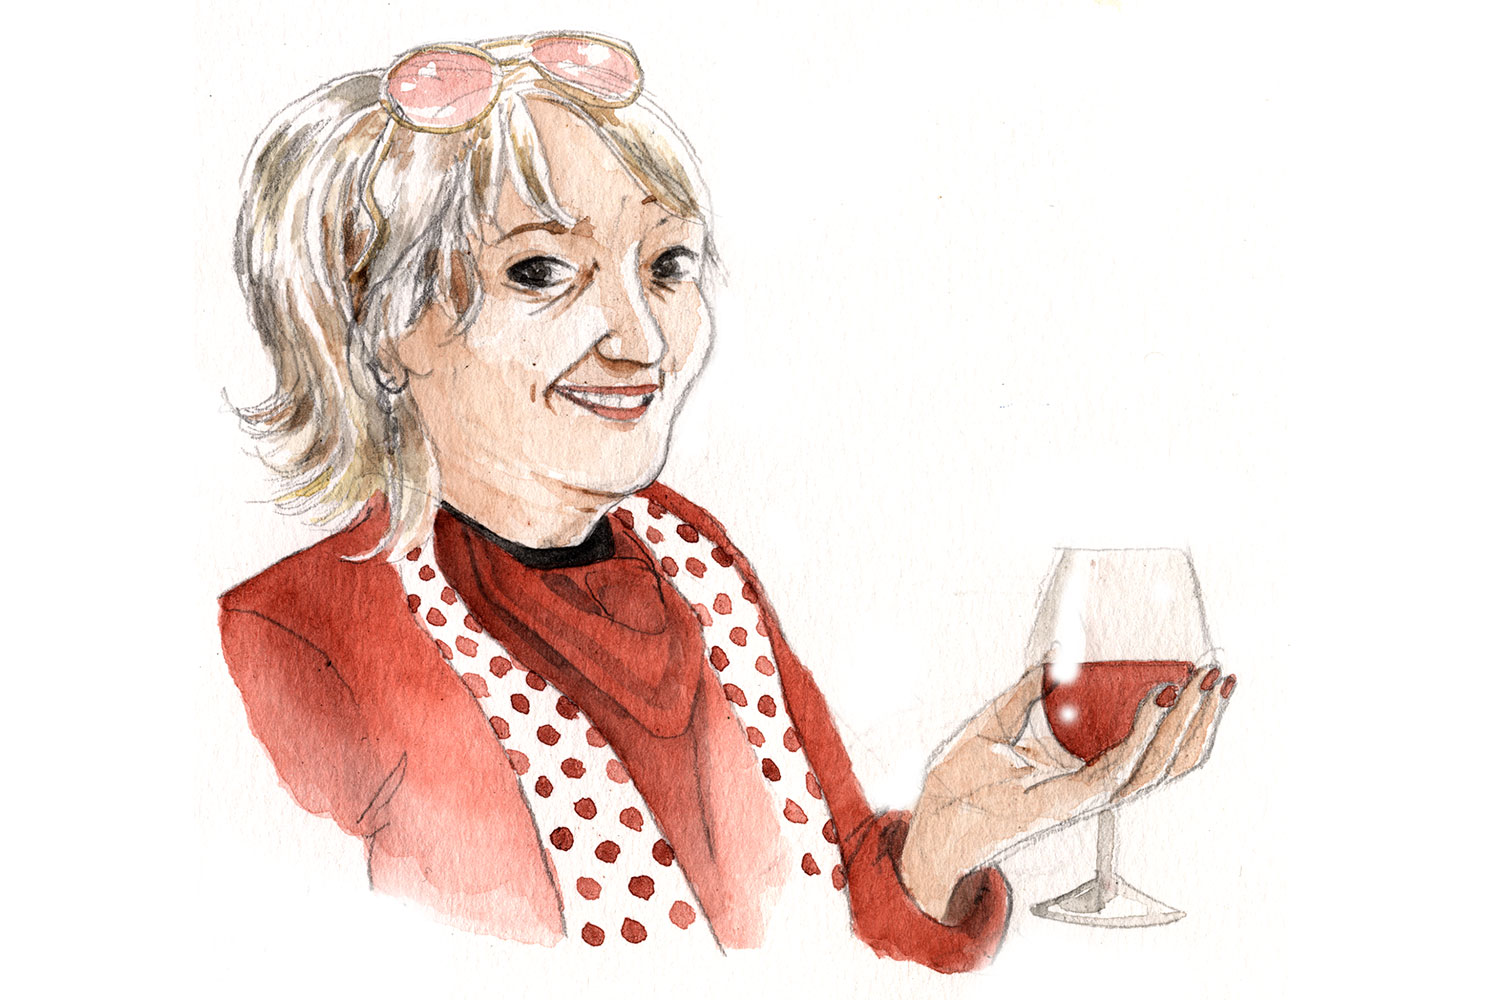 A watercolor illustration of Kristen Richards enjoying a glass of wine